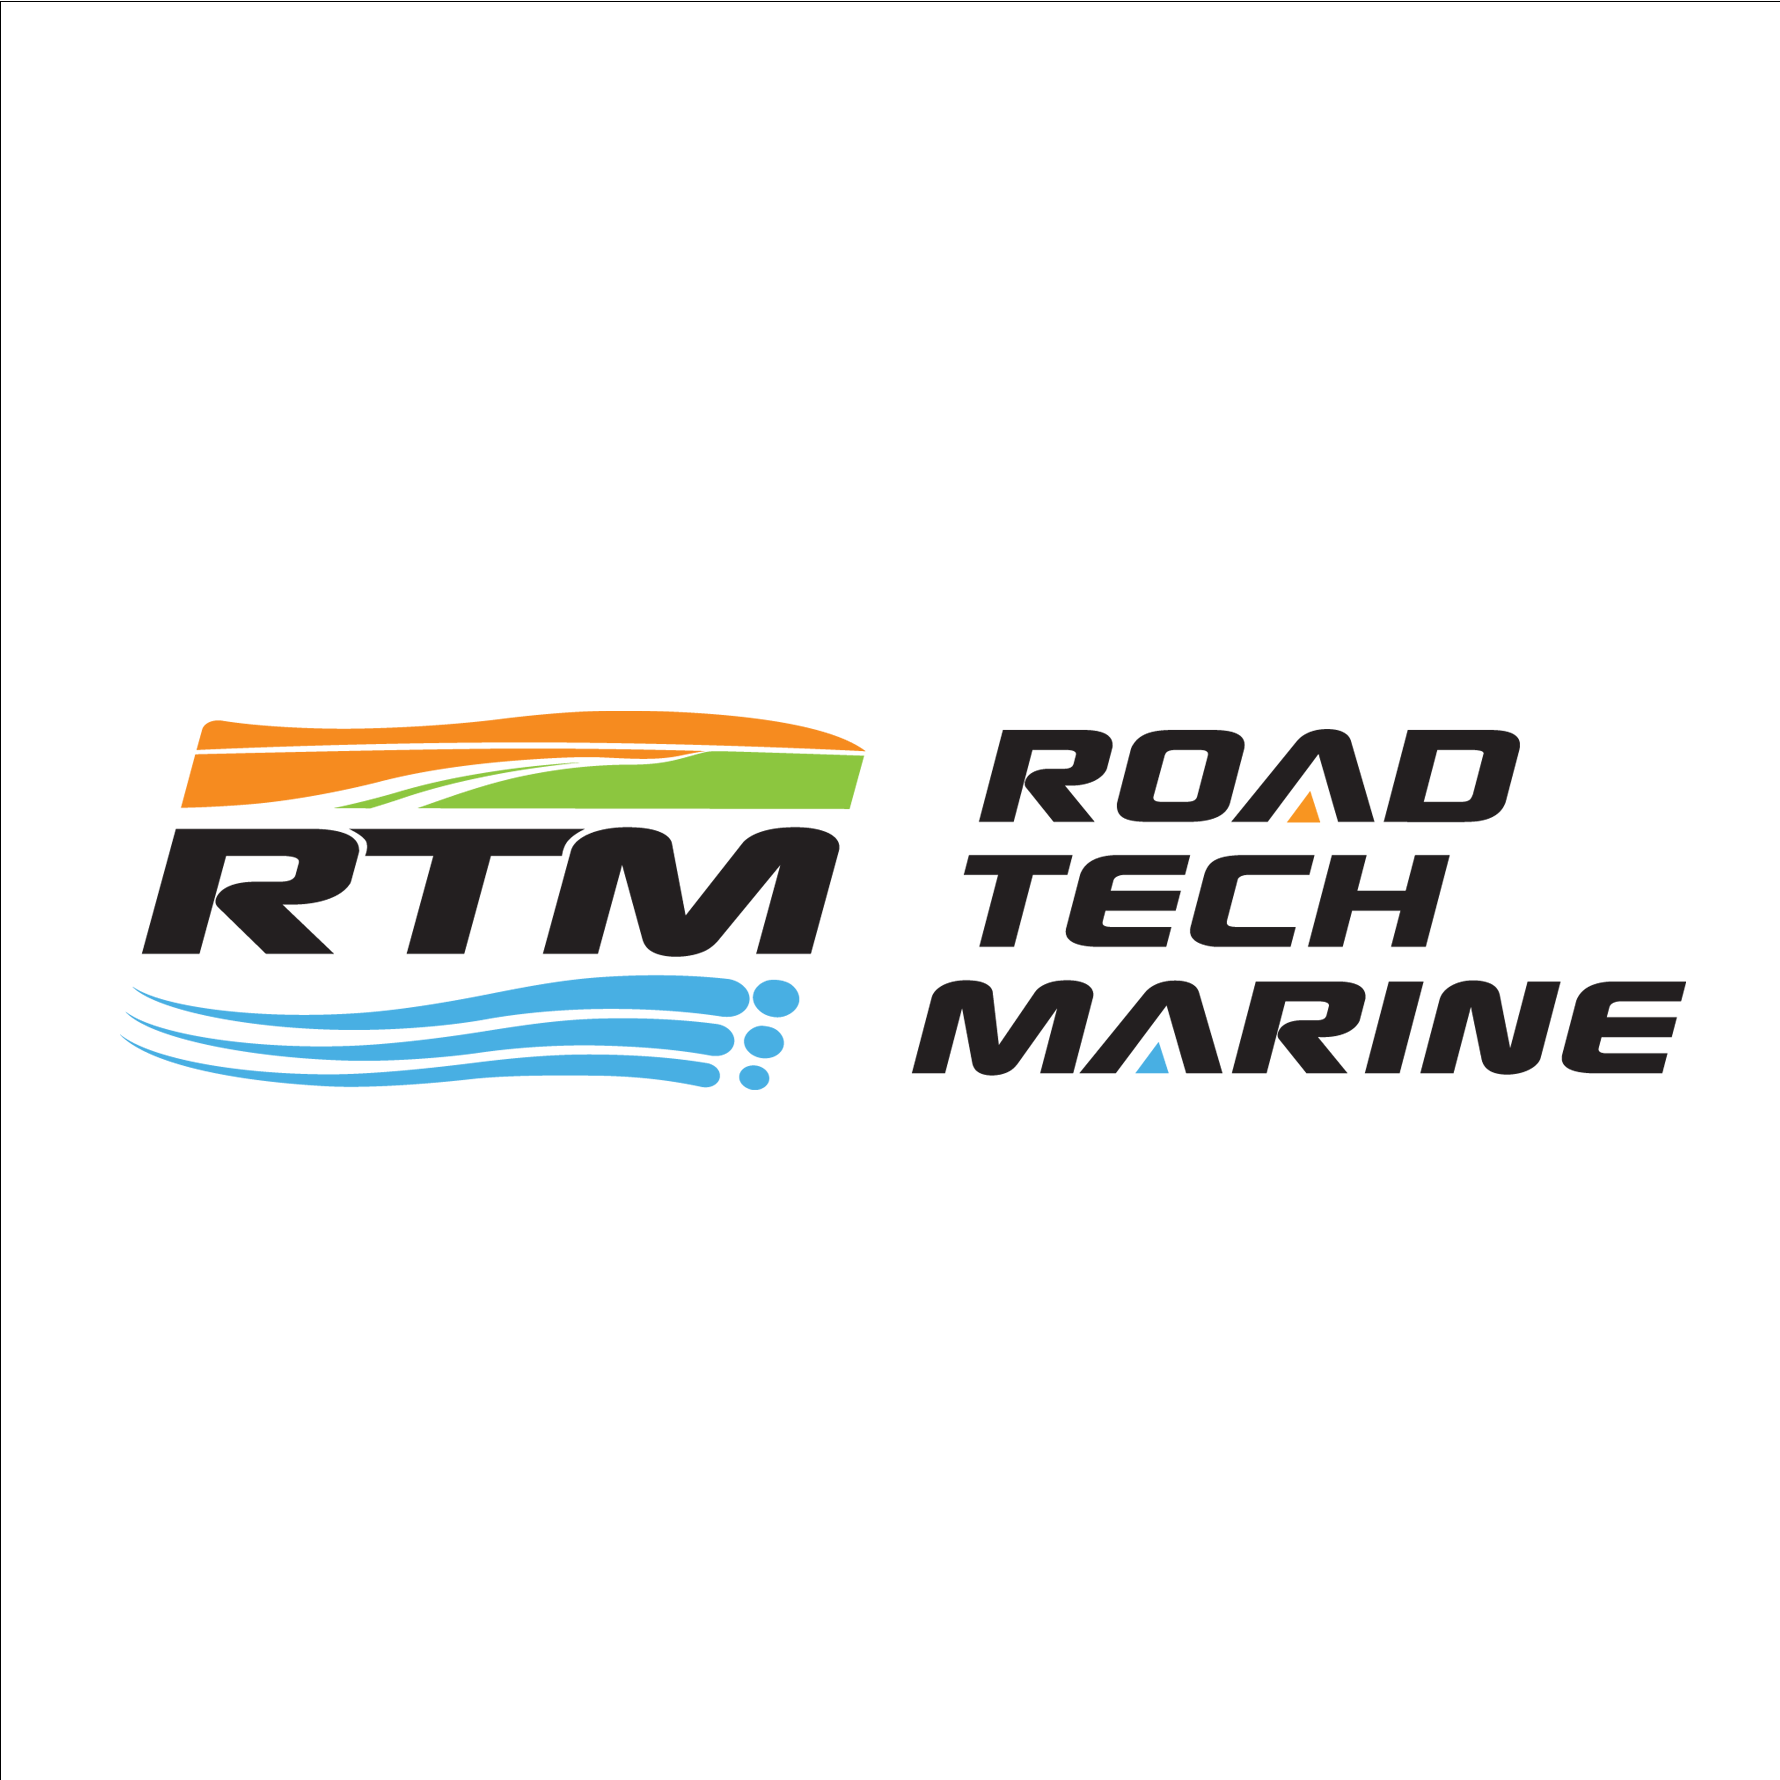 RTM - Road Tech Marine Cairns - Bungalow, QLD 4870 - (07) 4051 2060 | ShowMeLocal.com